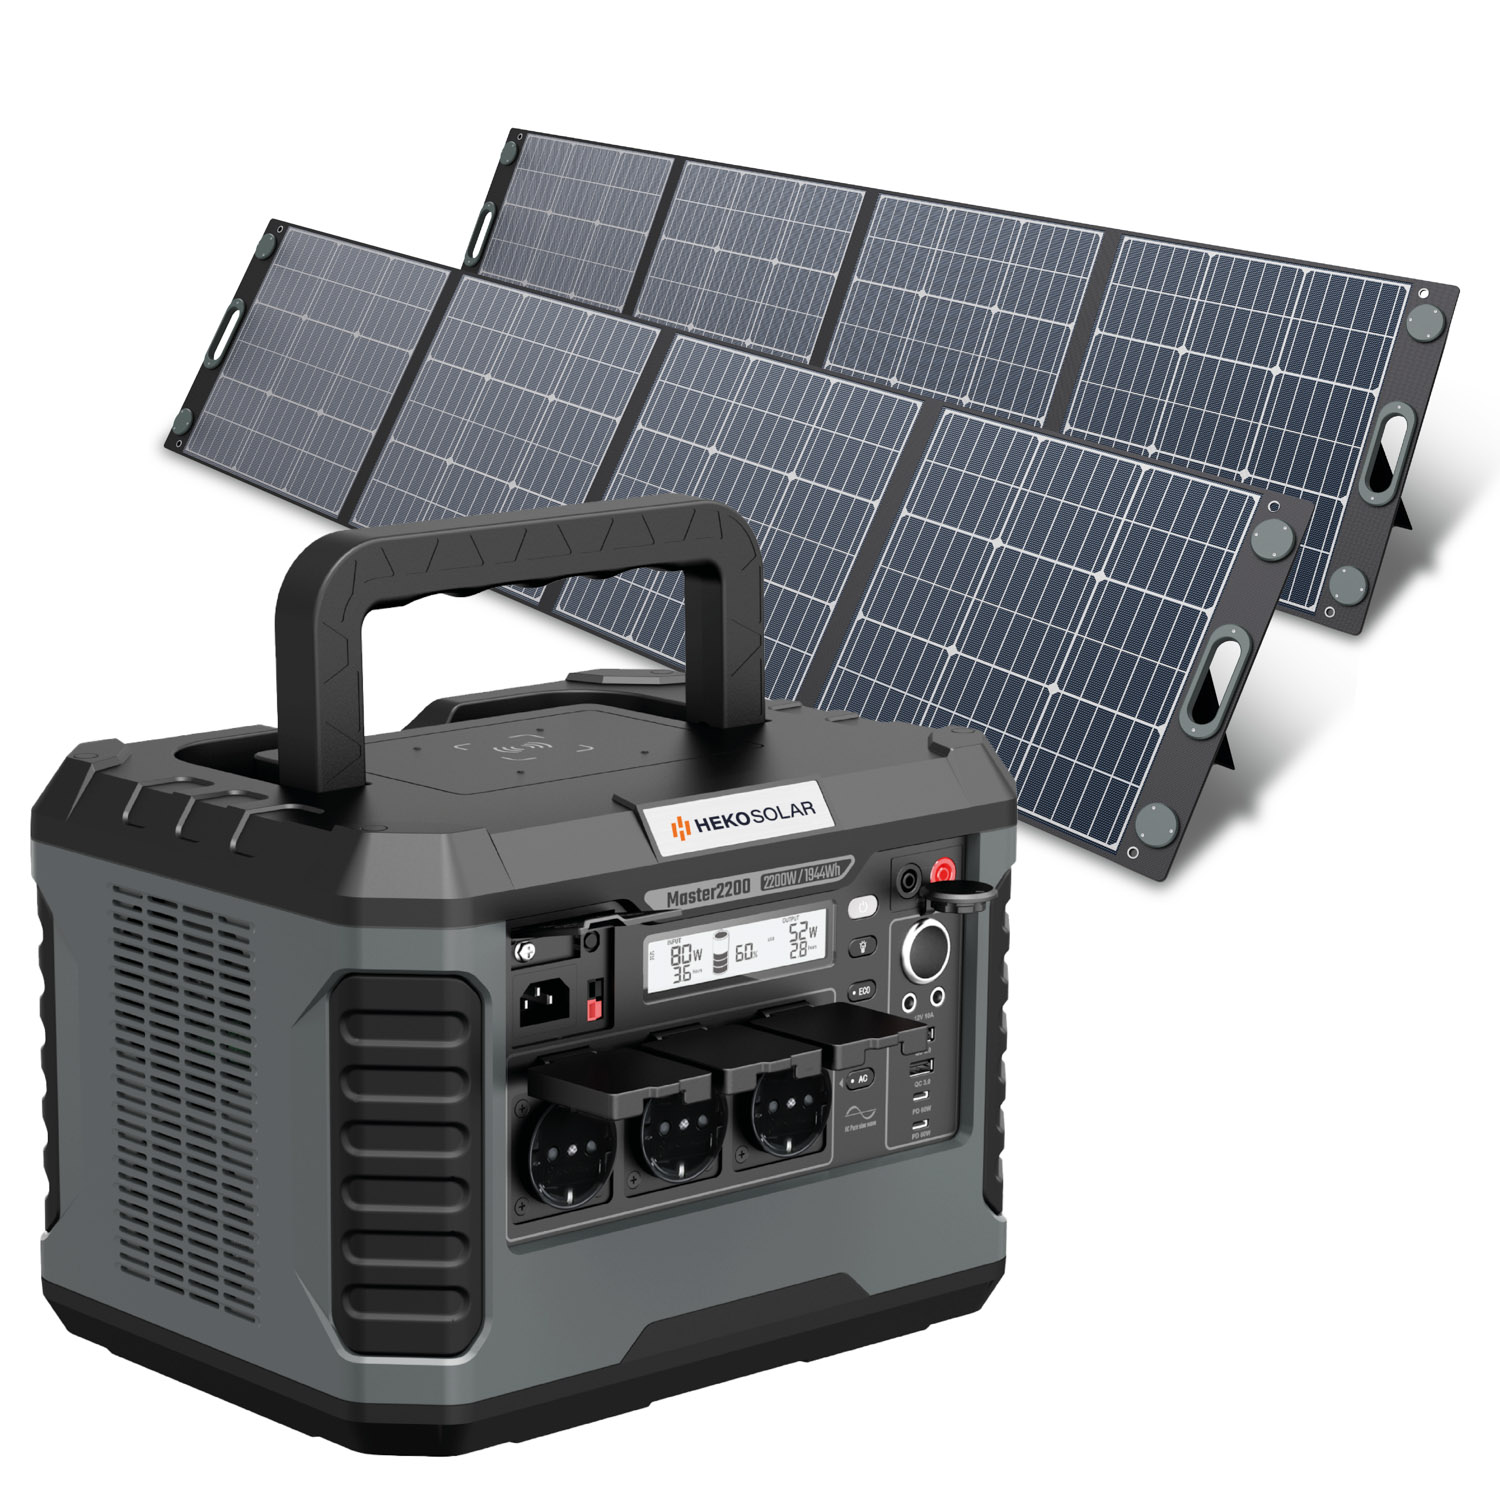 powerstation en portable solar panel master 2200 en unfold 400